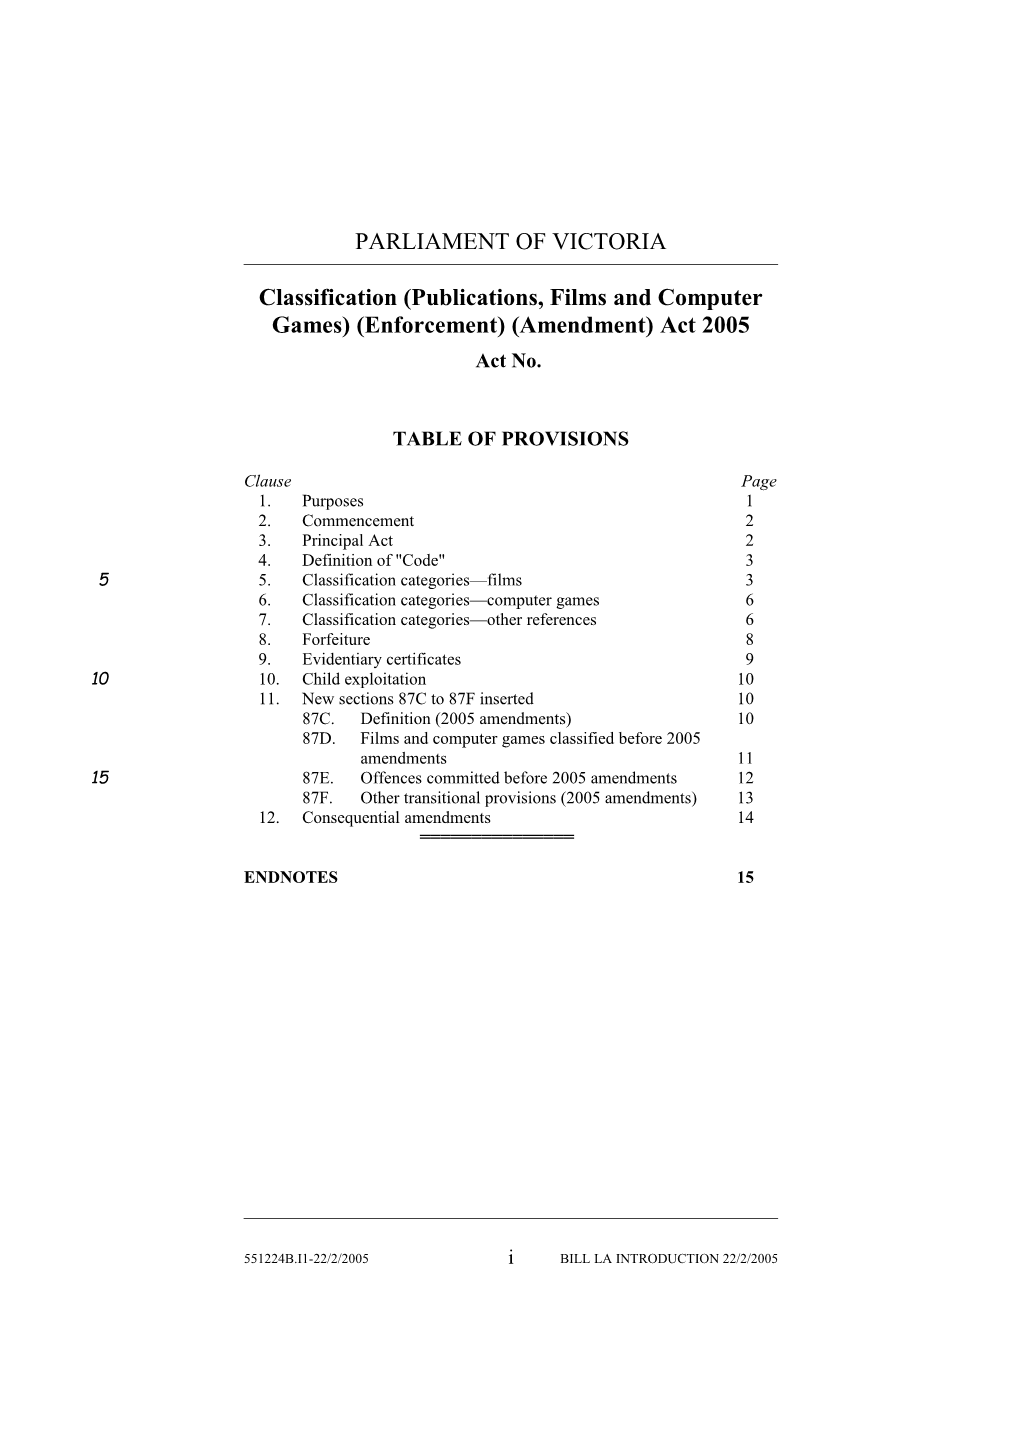 Classification (Publications, Films and Computer Games) (Enforcement) (Amendment) Act 2005